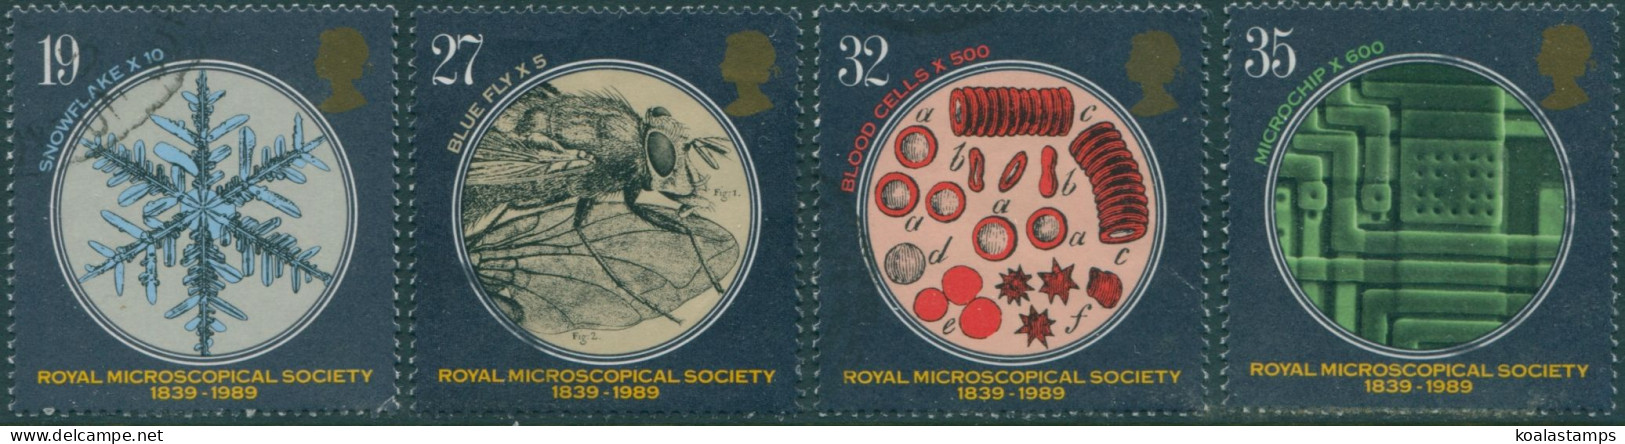 Great Britain 1989 SG1453-1456 QEII Microscopical Set FU - Unclassified